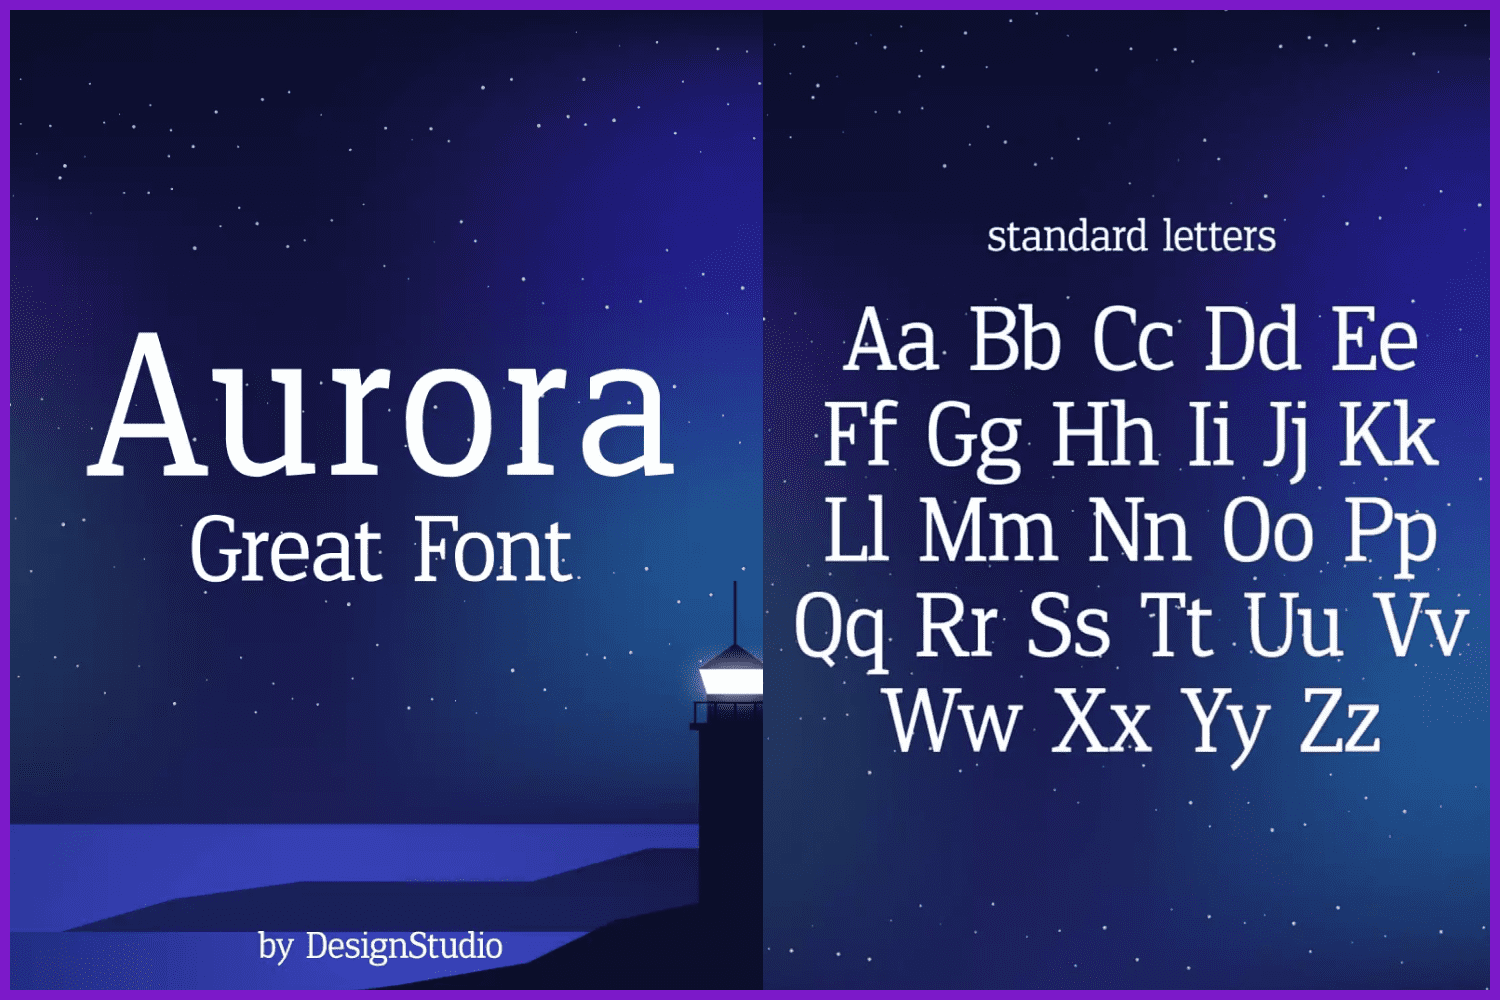 15 aurora monospaced serif font.